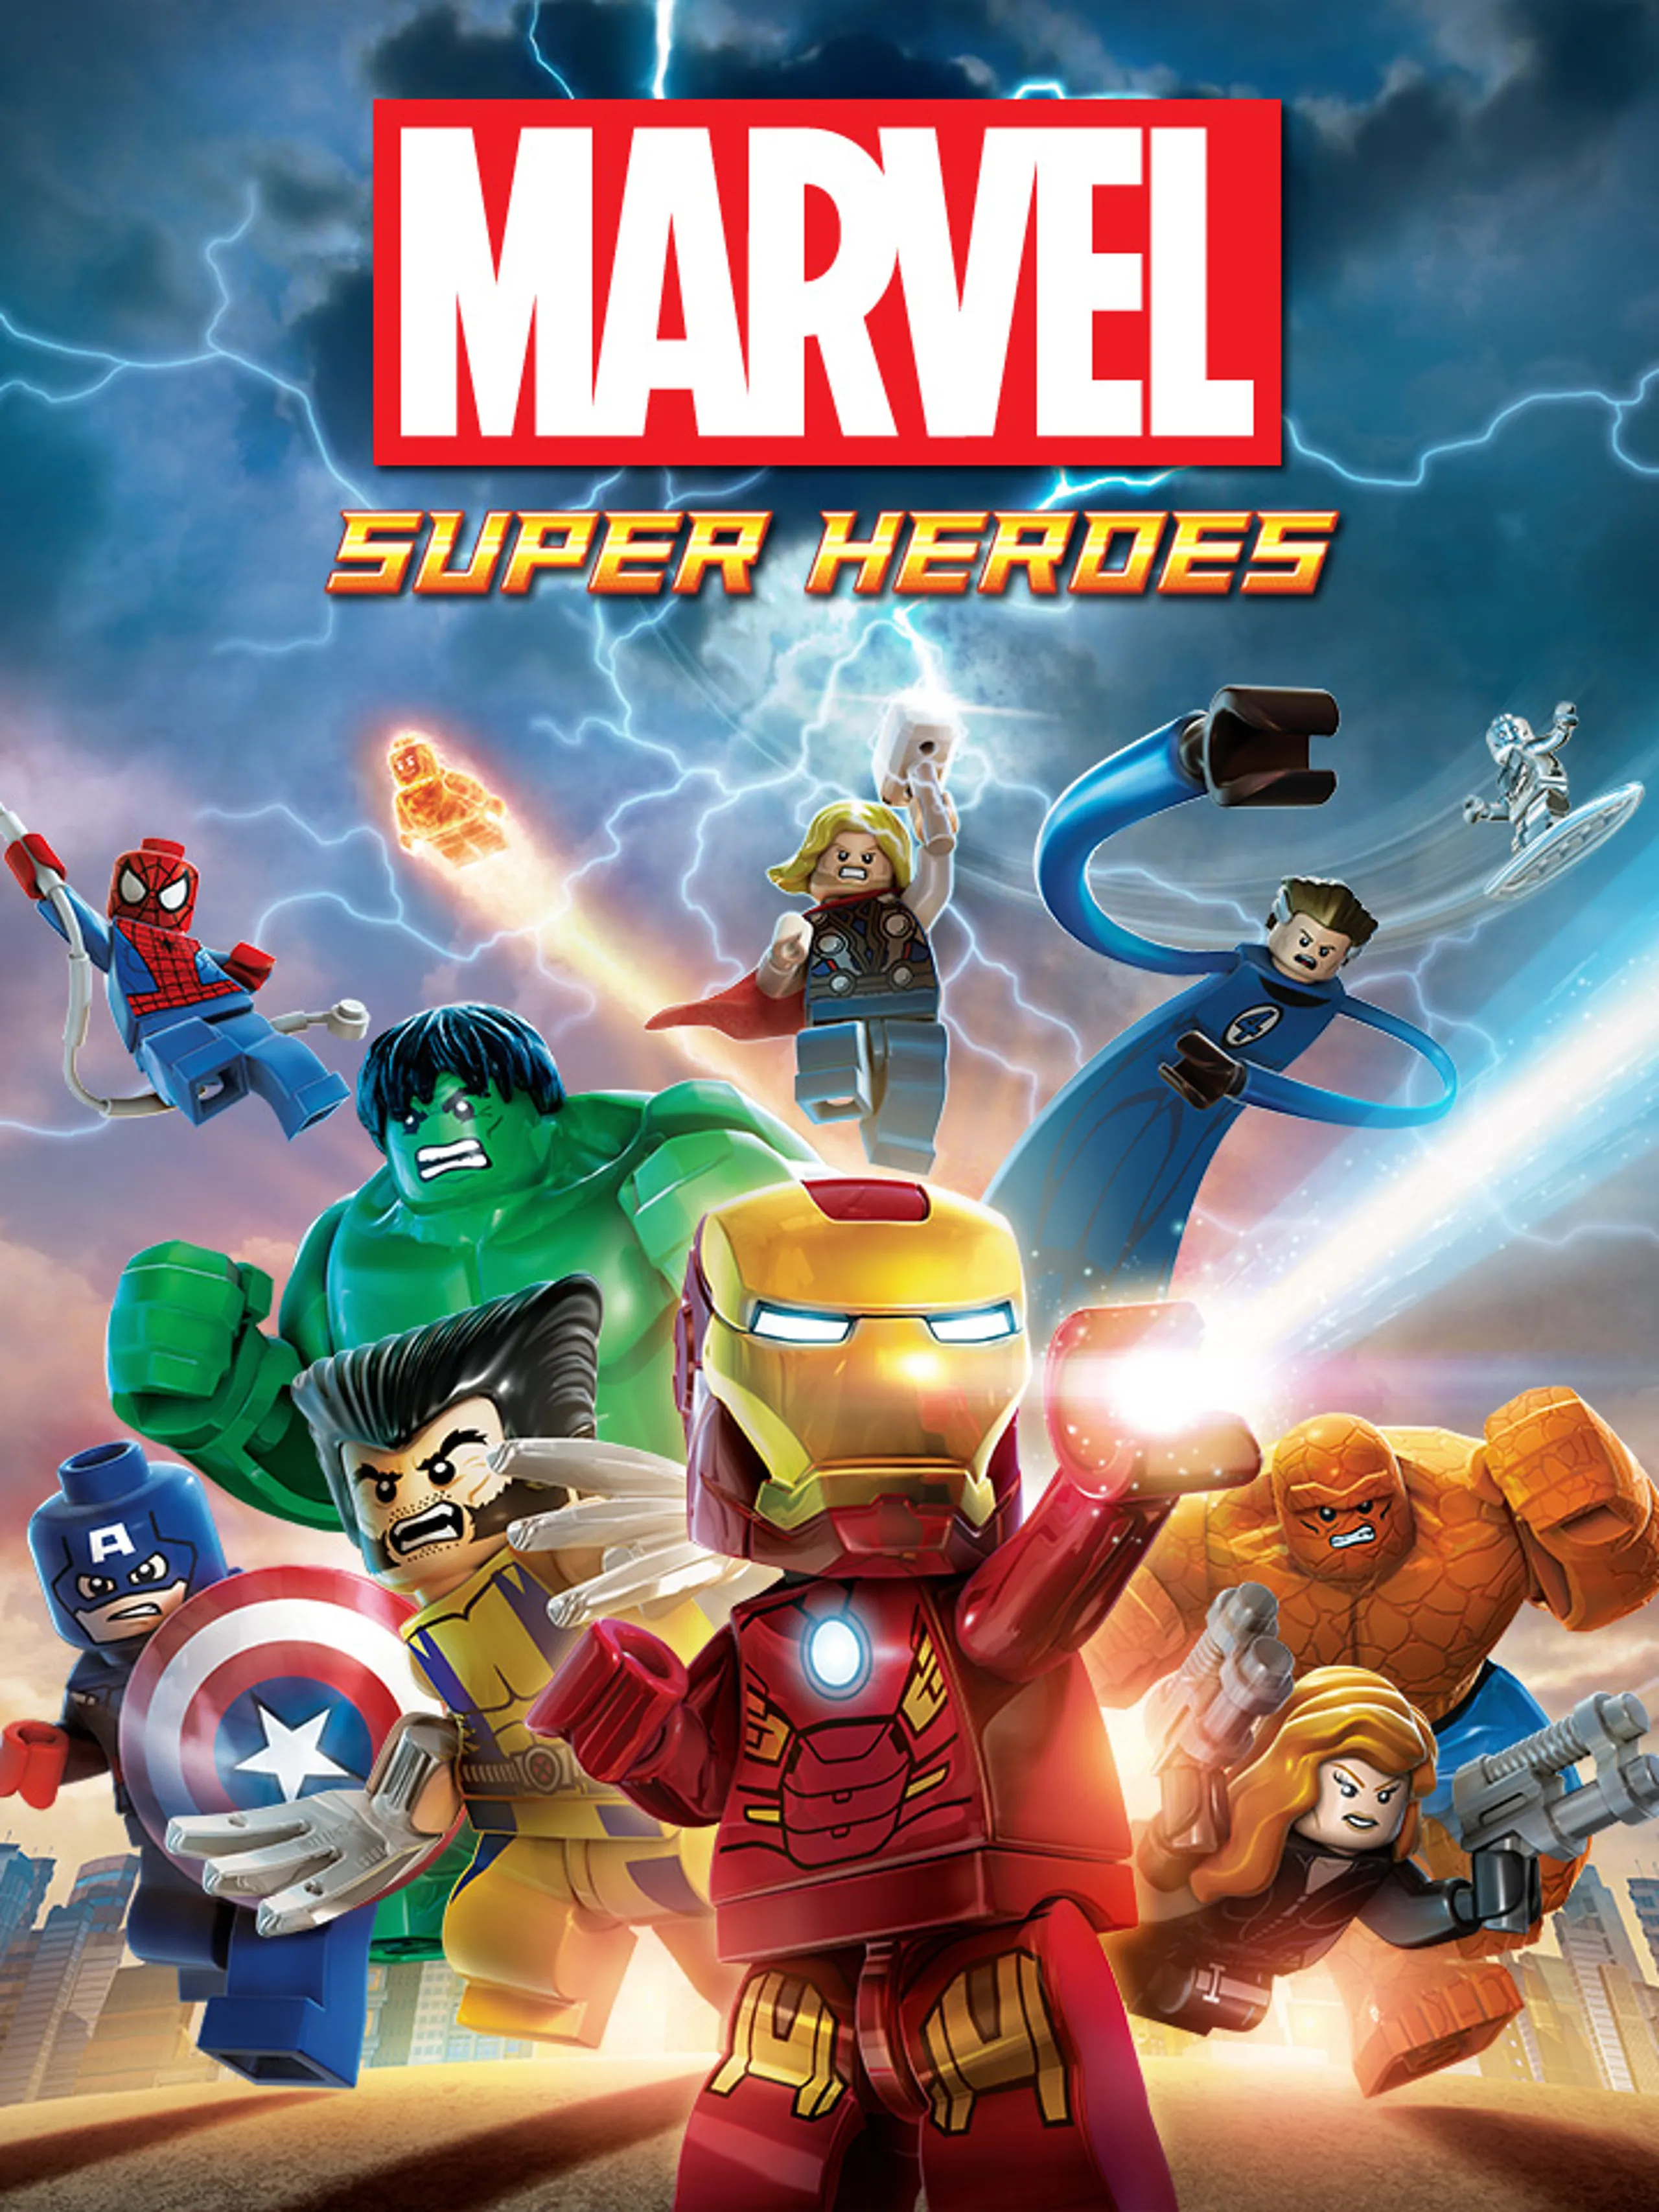 LEGO Marvel Super Heroes Minifigure - War Machine - Extra Extra Bricks